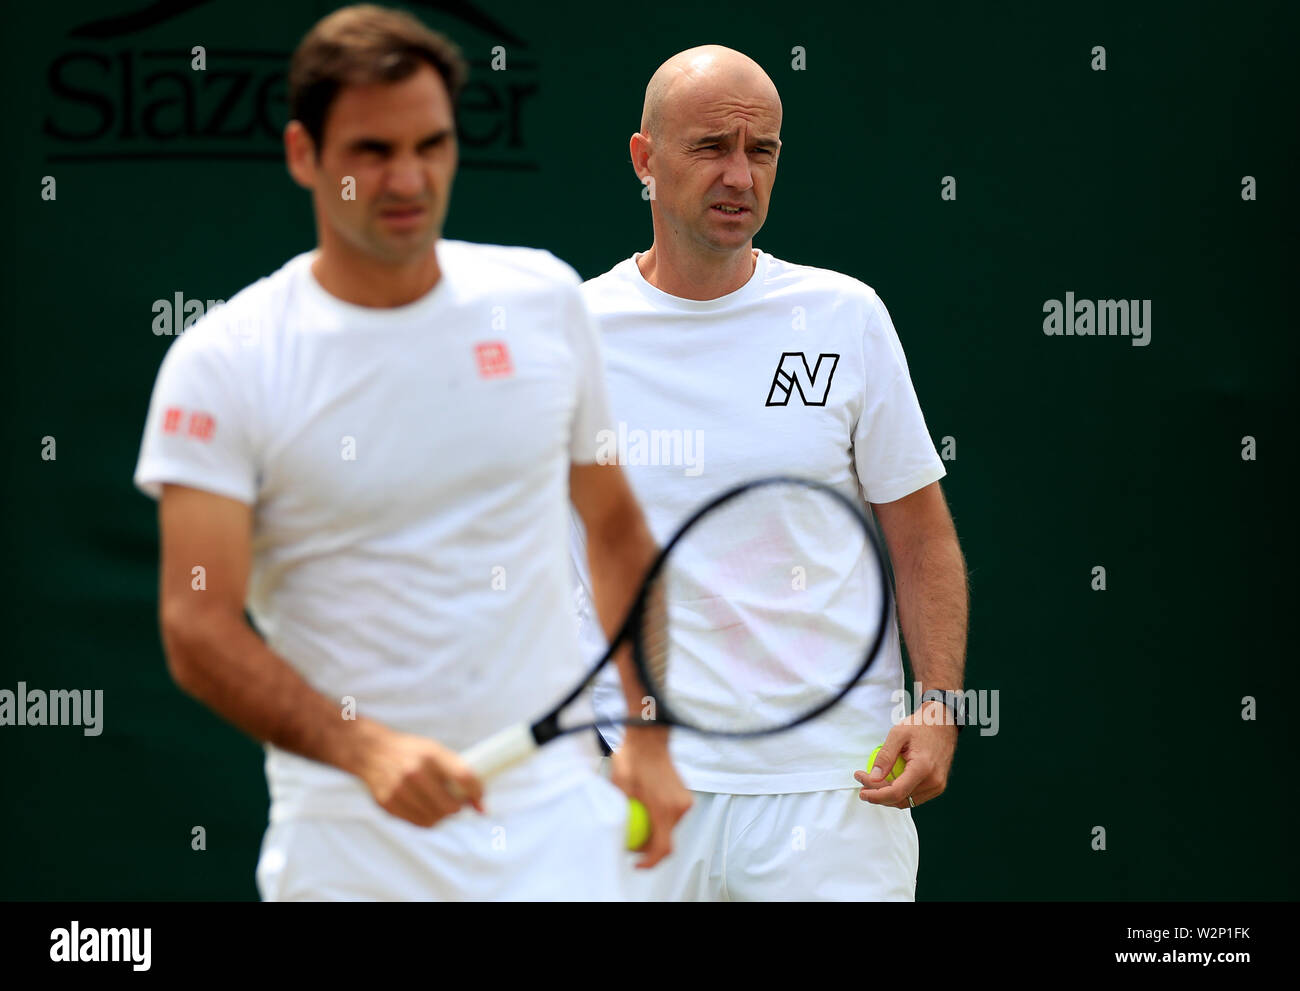 Ivan Ljubicic, Trainer von Roger Federer am 9. Tag der Wimbledon  Championships beim All England Lawn Tennis and Croquet Club in Wimbledon  Stockfotografie - Alamy